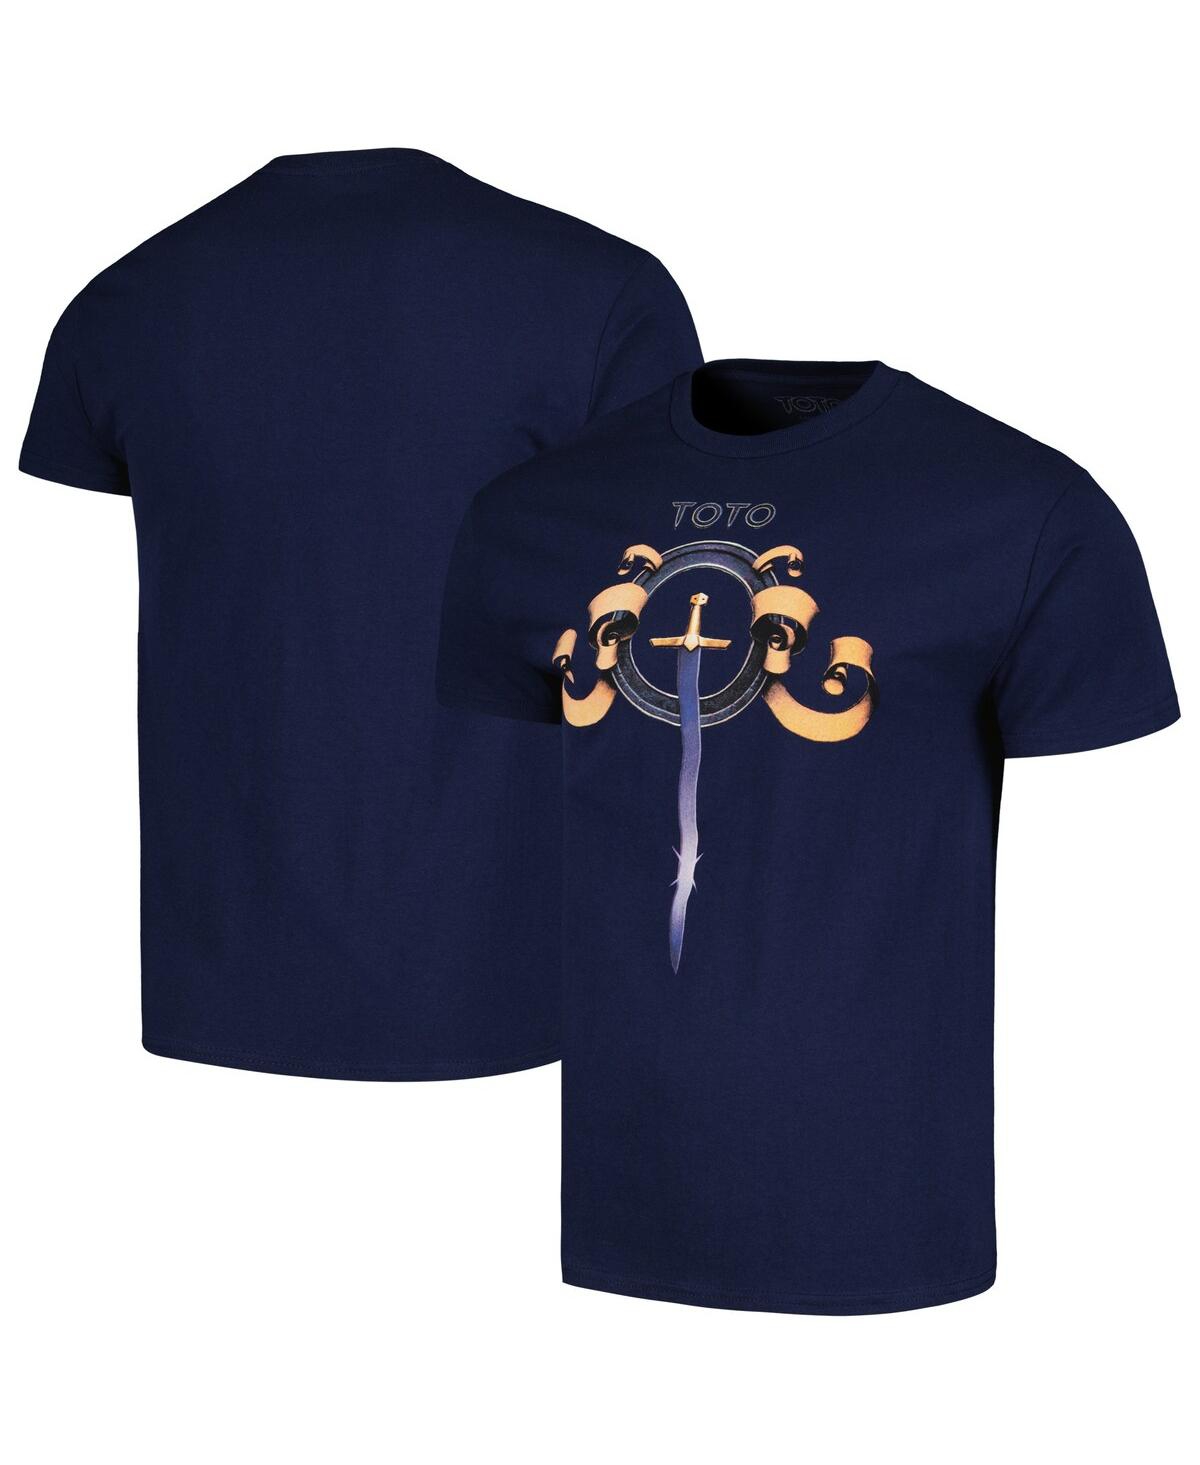 Men's Manhead Merch Navy Toto Self Titled Sword Graphic T-shirt - Navy